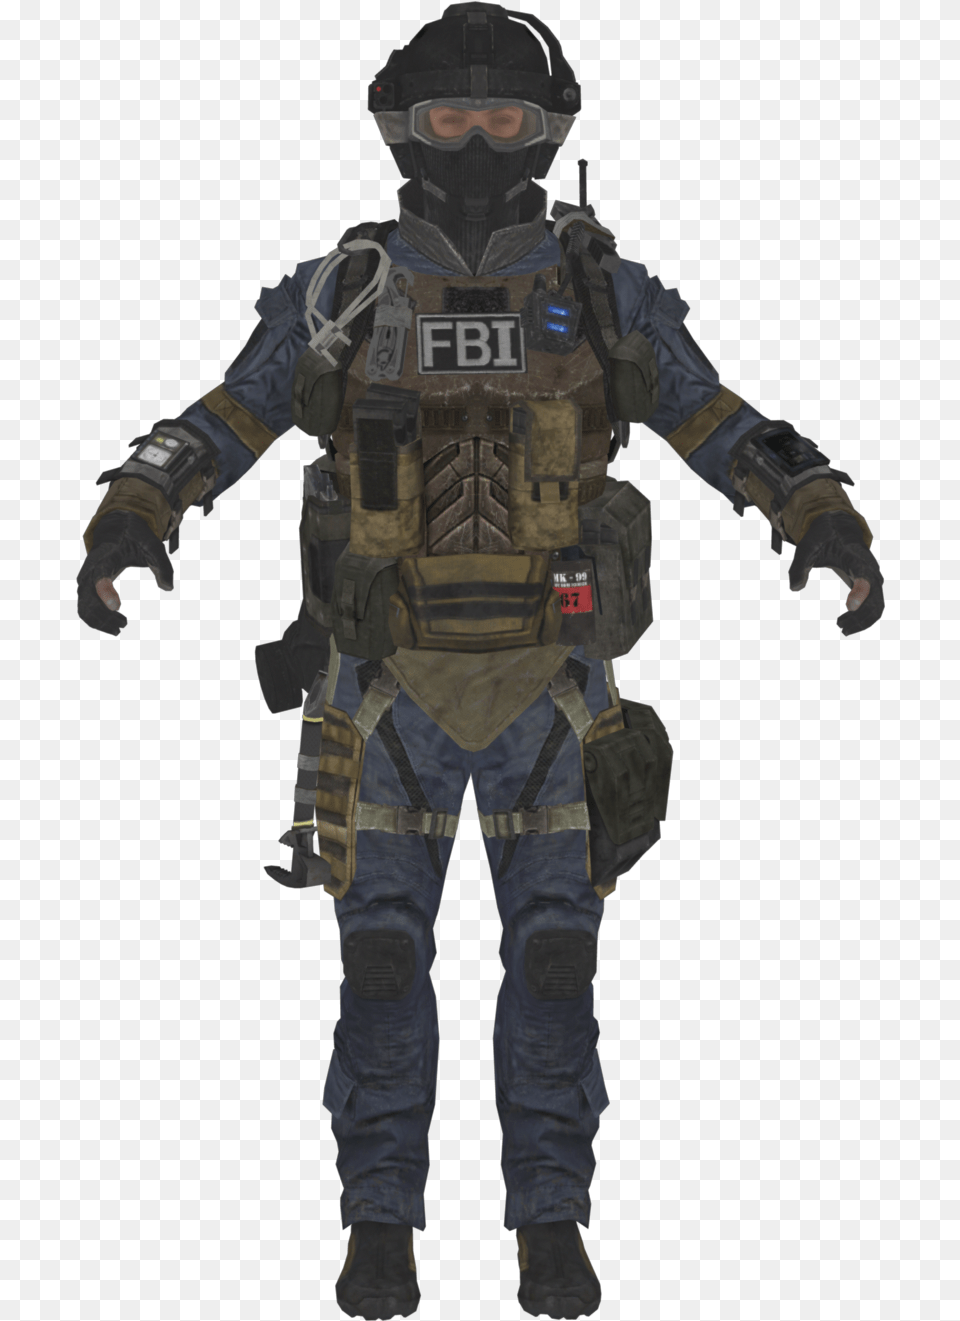 Fbi Lmg Model Boii Black Ops 2 Mercs Sniper, Person, Helmet, Clothing, Glove Free Png